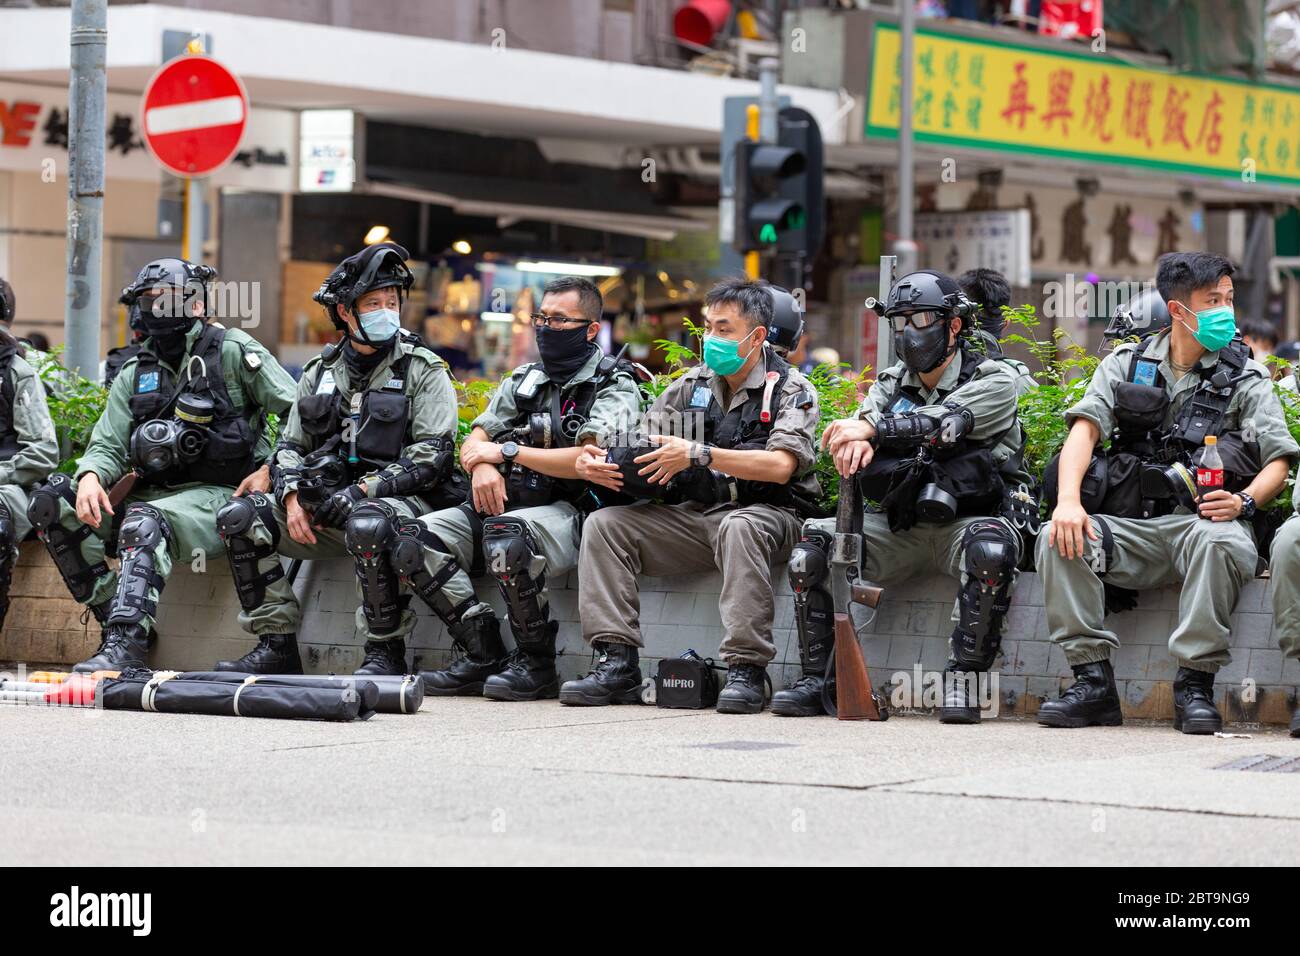 Hong Kong, 24th May 2020. Police resting roadside in Wanchai. Credit: David Ogg / Alamy Live News Stock Photo